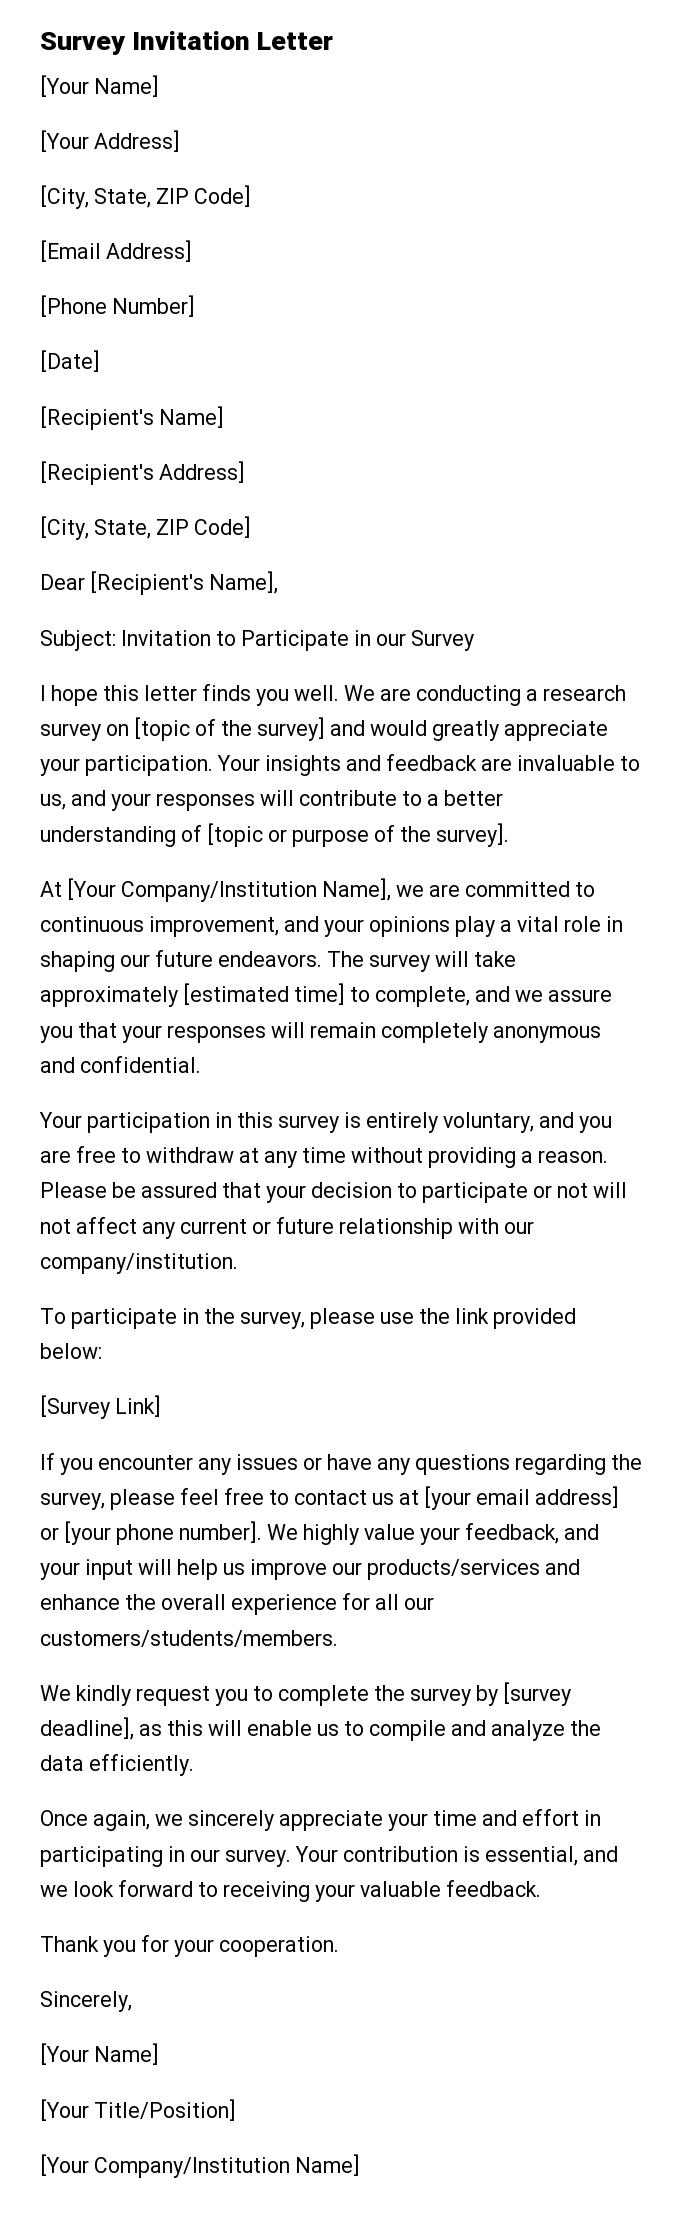 Survey Invitation Letter